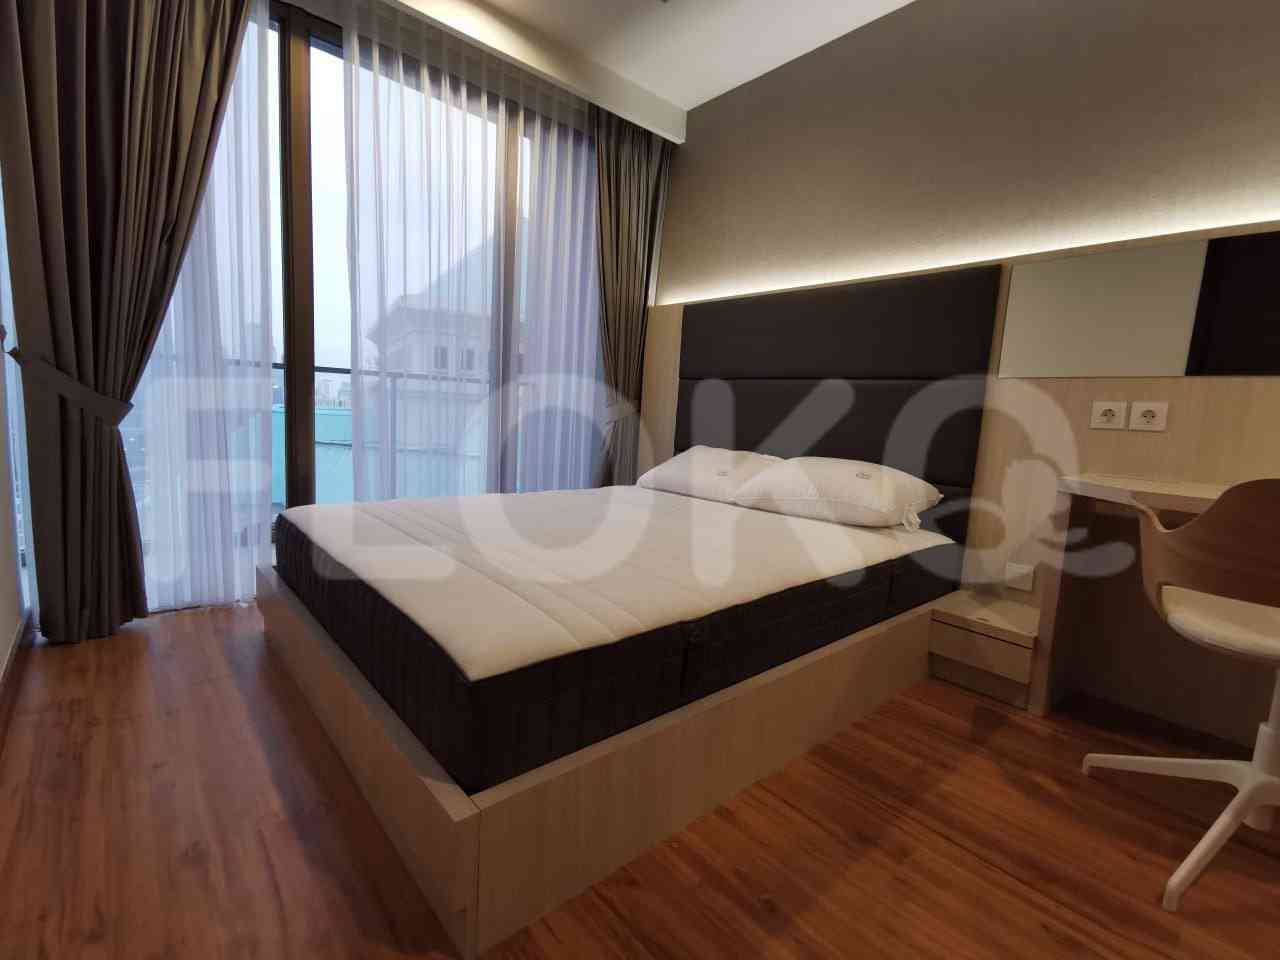 Tipe 1 Kamar Tidur di Lantai 15 untuk disewakan di Sudirman Hill Residences - fta6ab 1